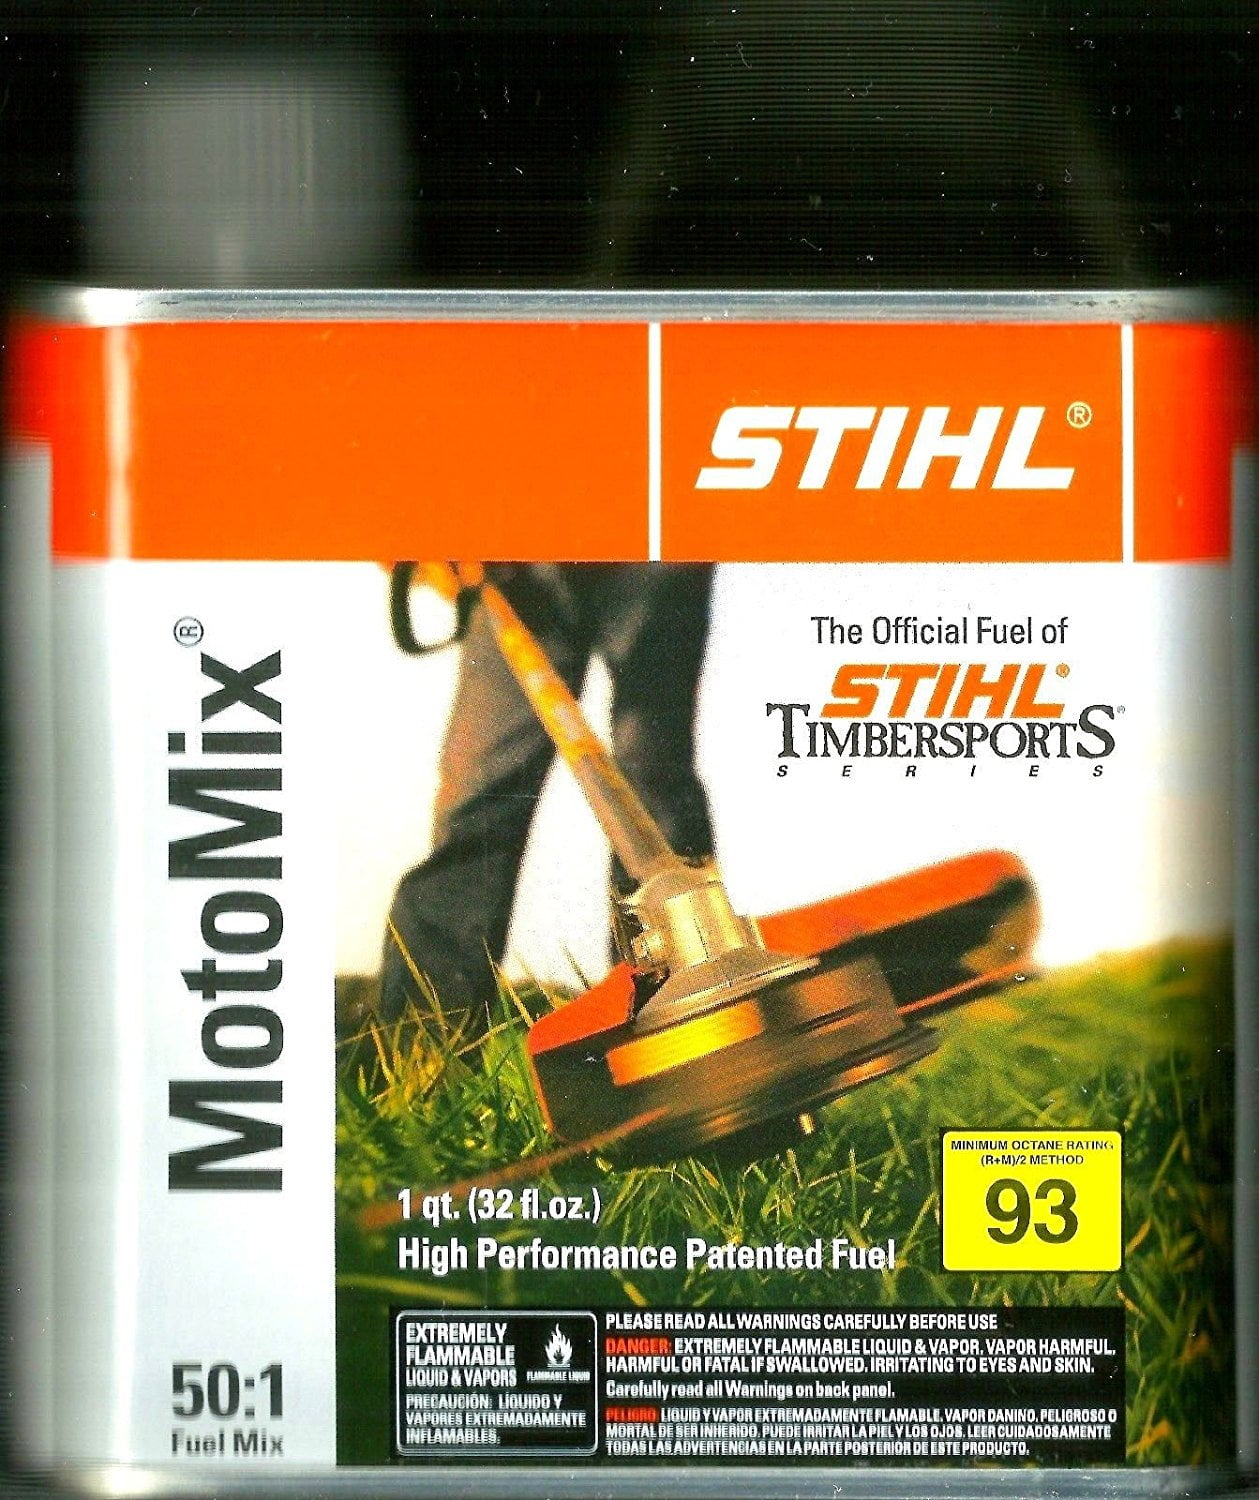 The Benefits of STIHL MotoMix®